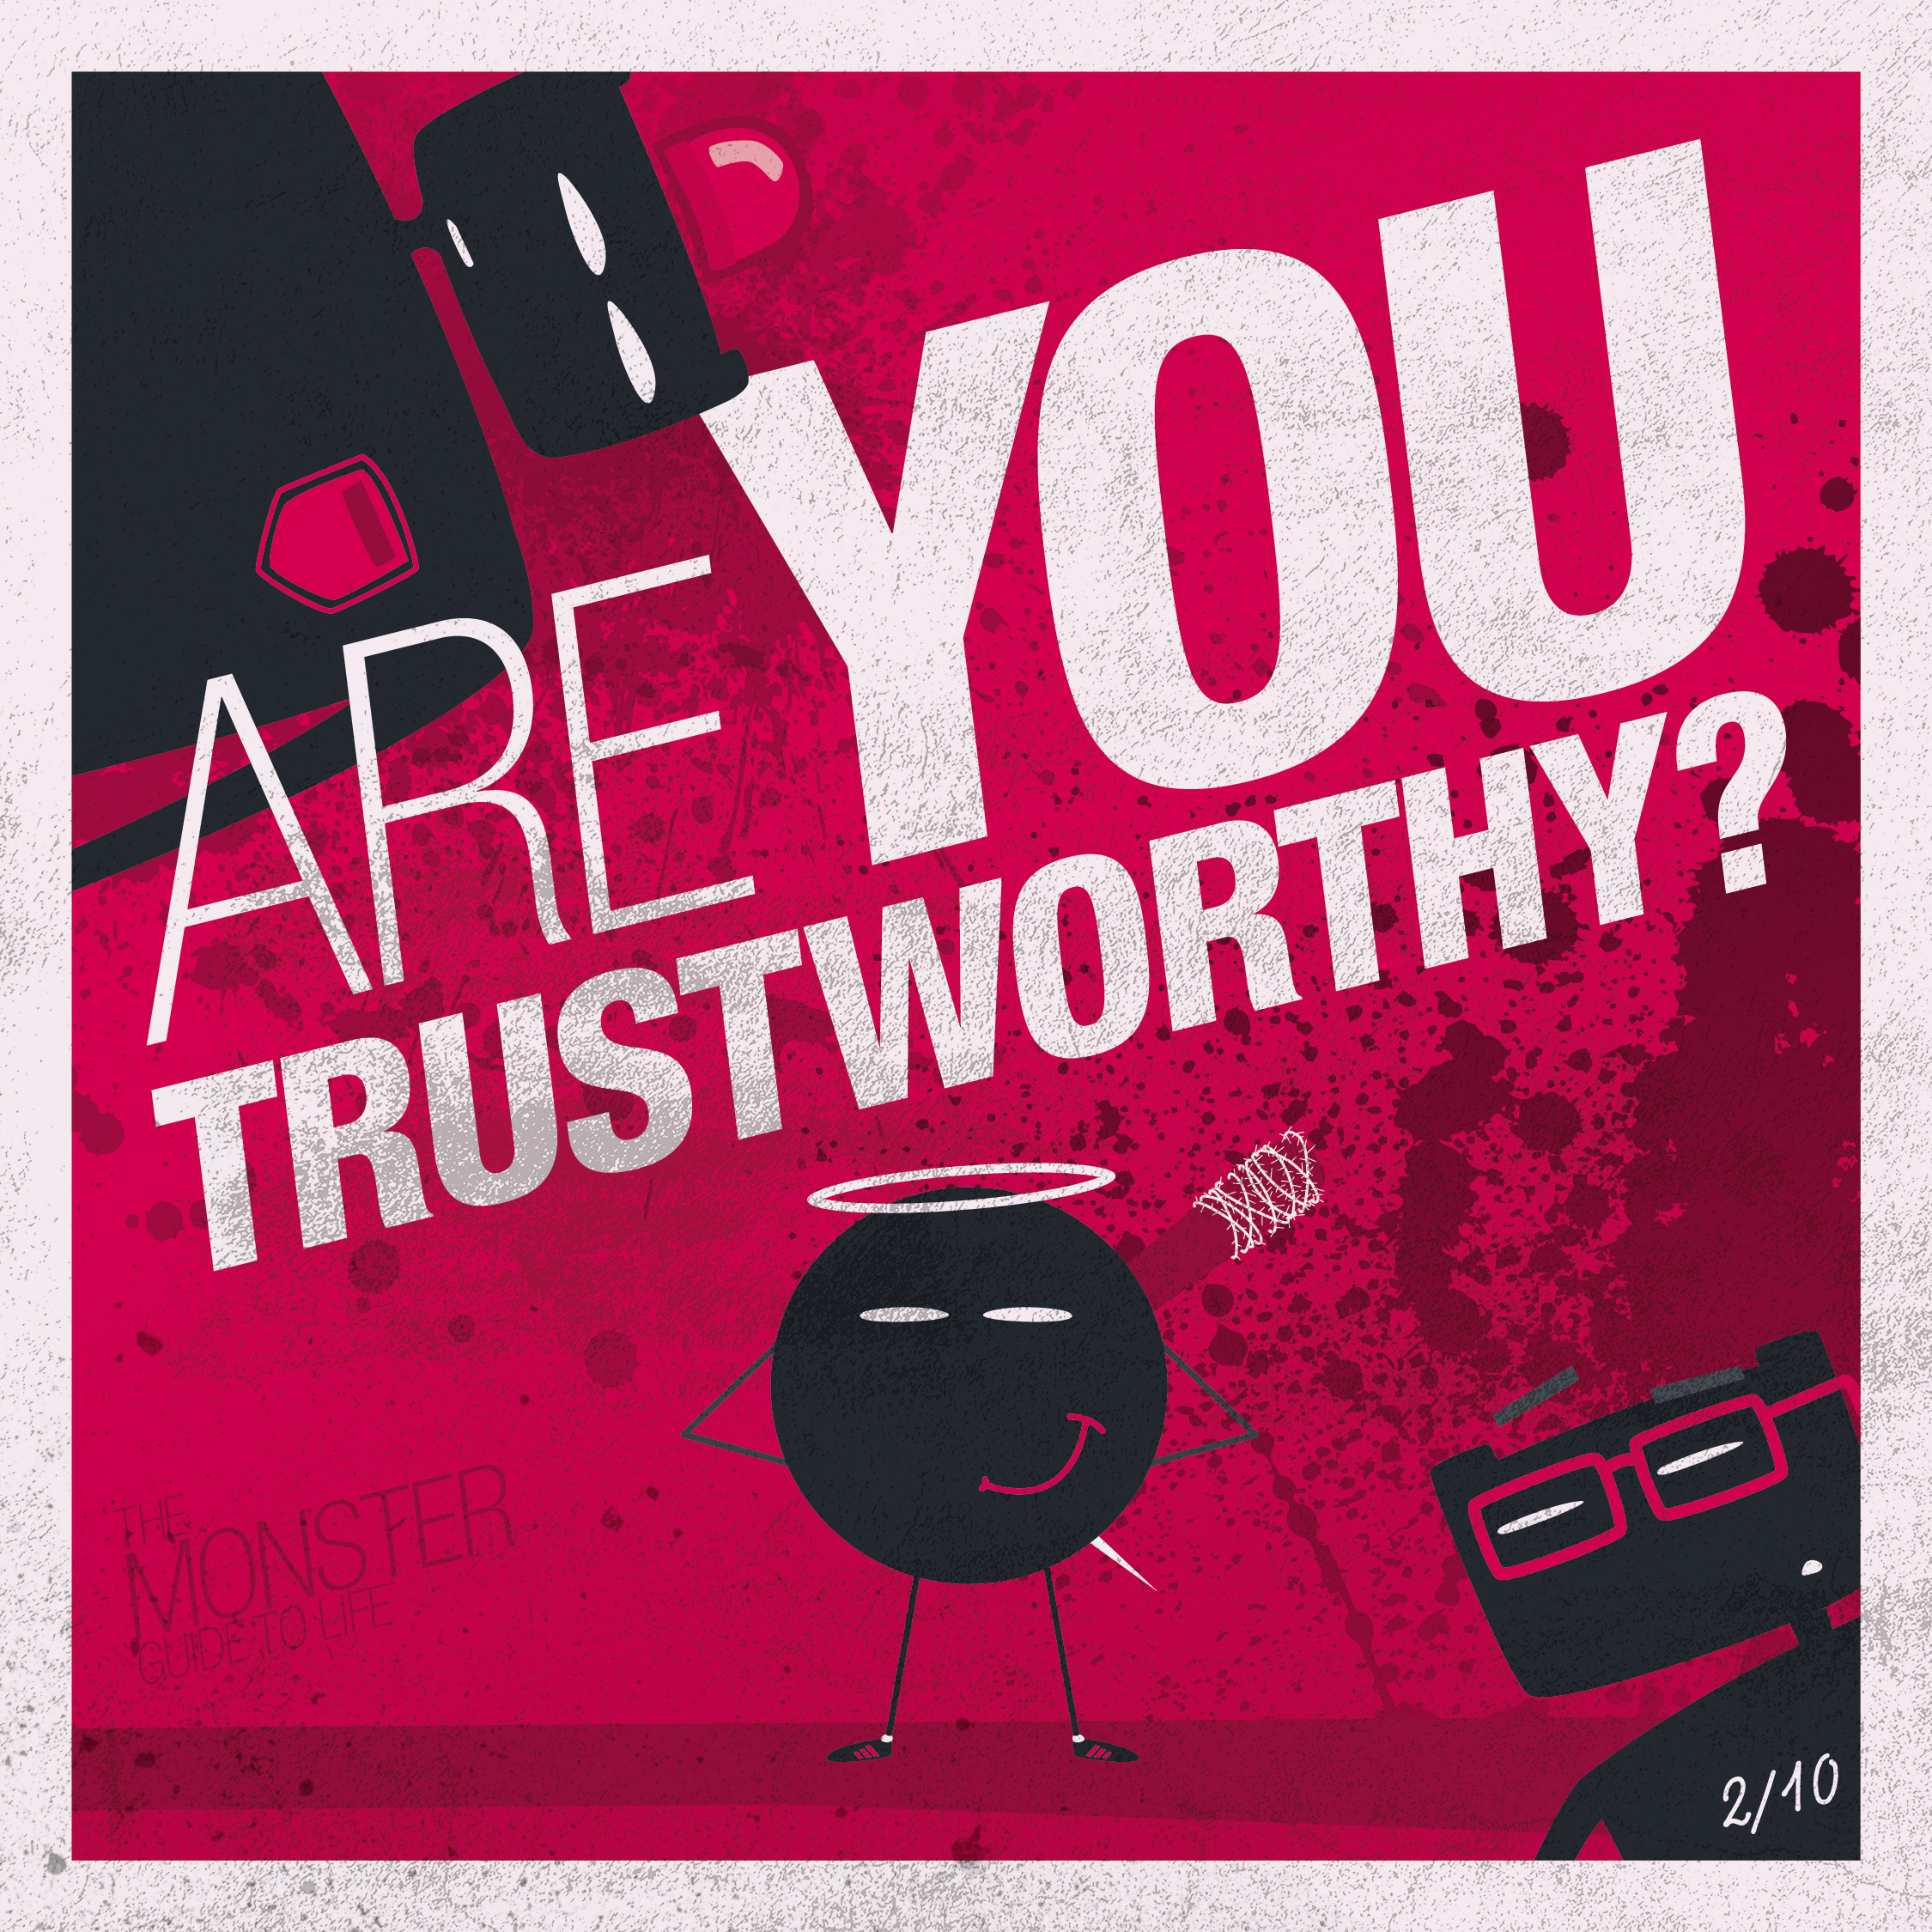 Are you trustworthy?